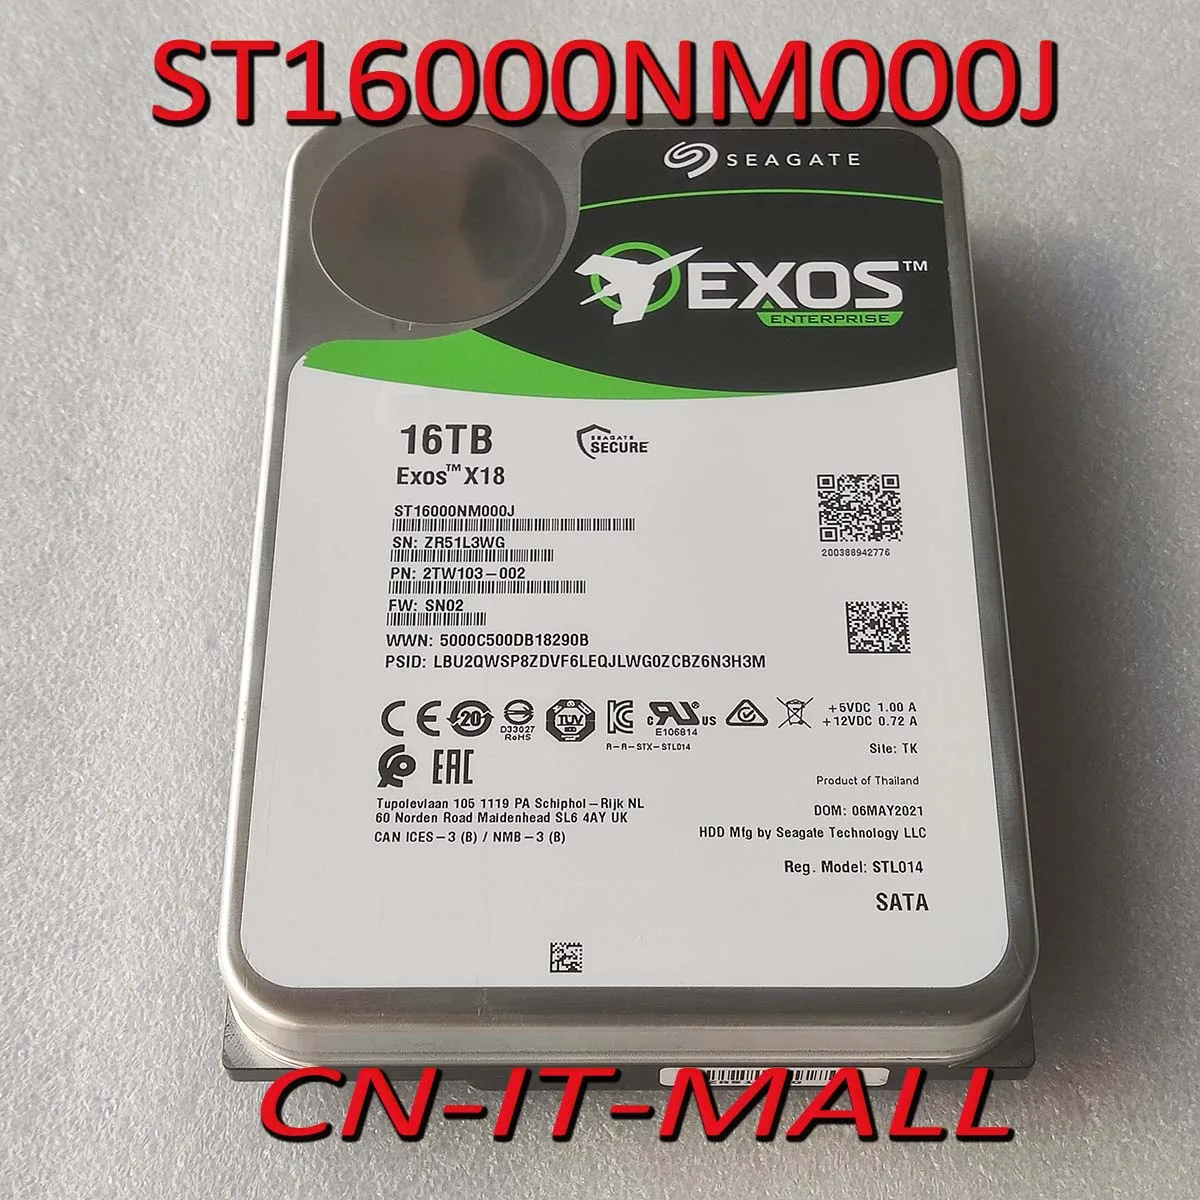 

Seagate Exos ST16000NM001G ST16000NM000J 16TB X16 SATA 6Gb/s 512e/4Kn 7200 RPM 256MB Cache 3.5" Internal Hard Drive